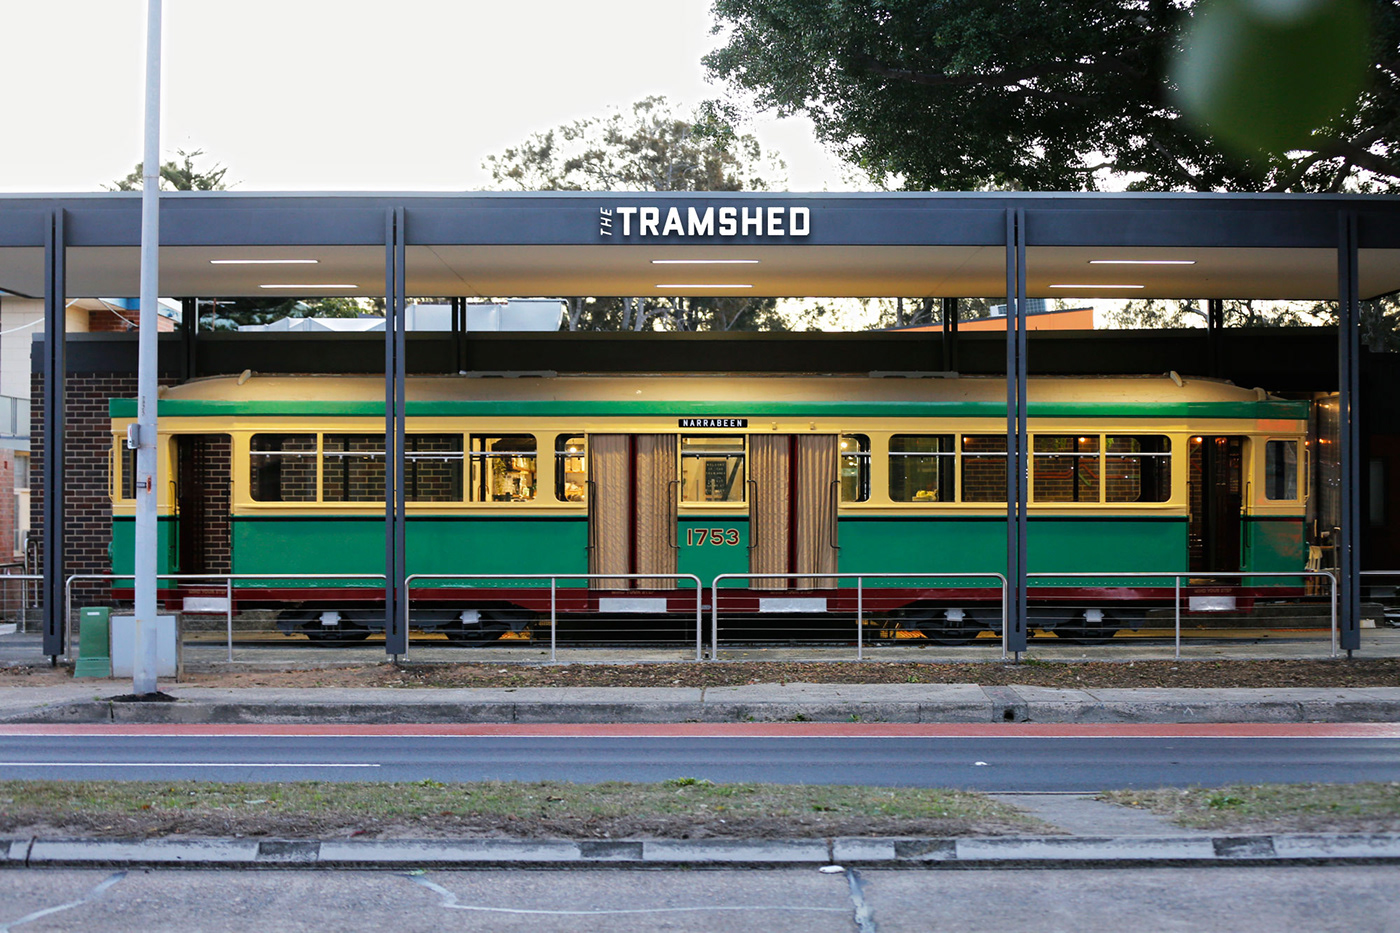 sydney Melbourne Australia tram Trams trains rail tramway cafe restaurant